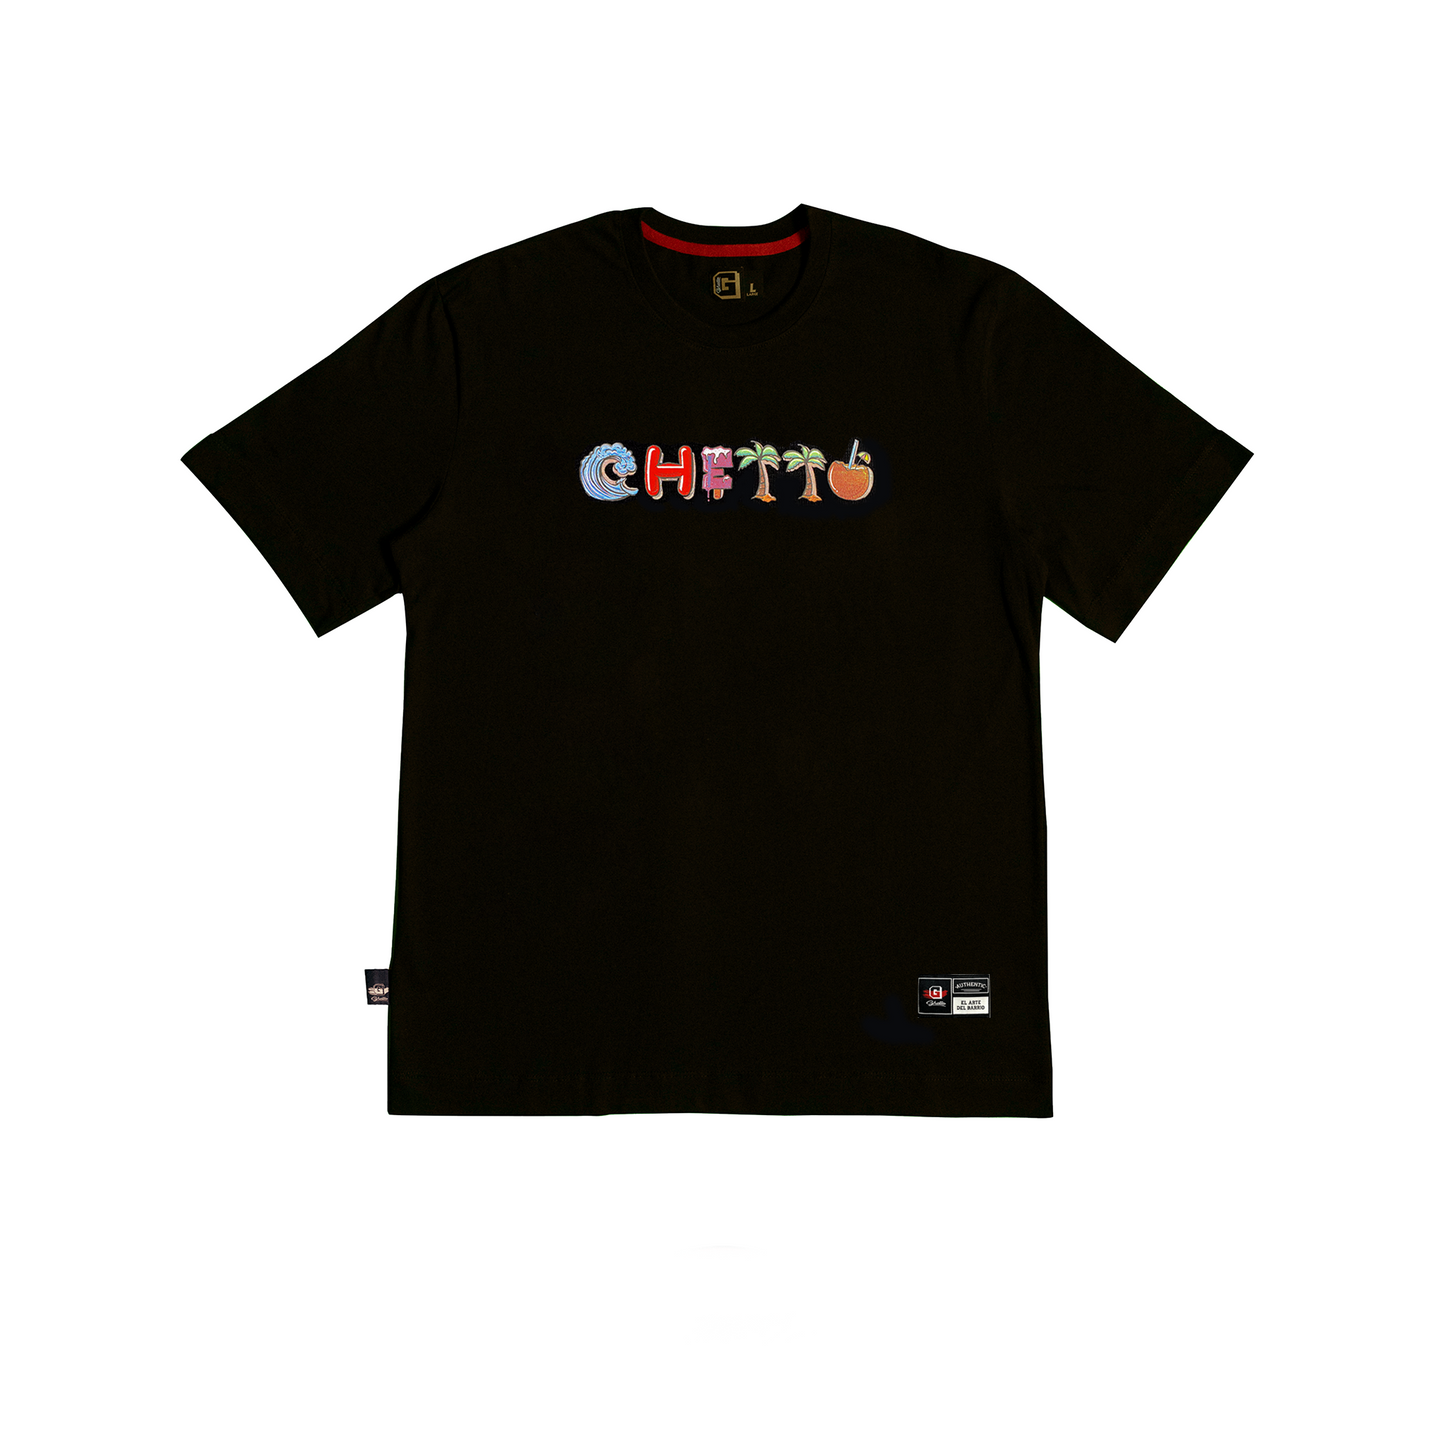 Camiseta Ghetto Coco Loco Negra